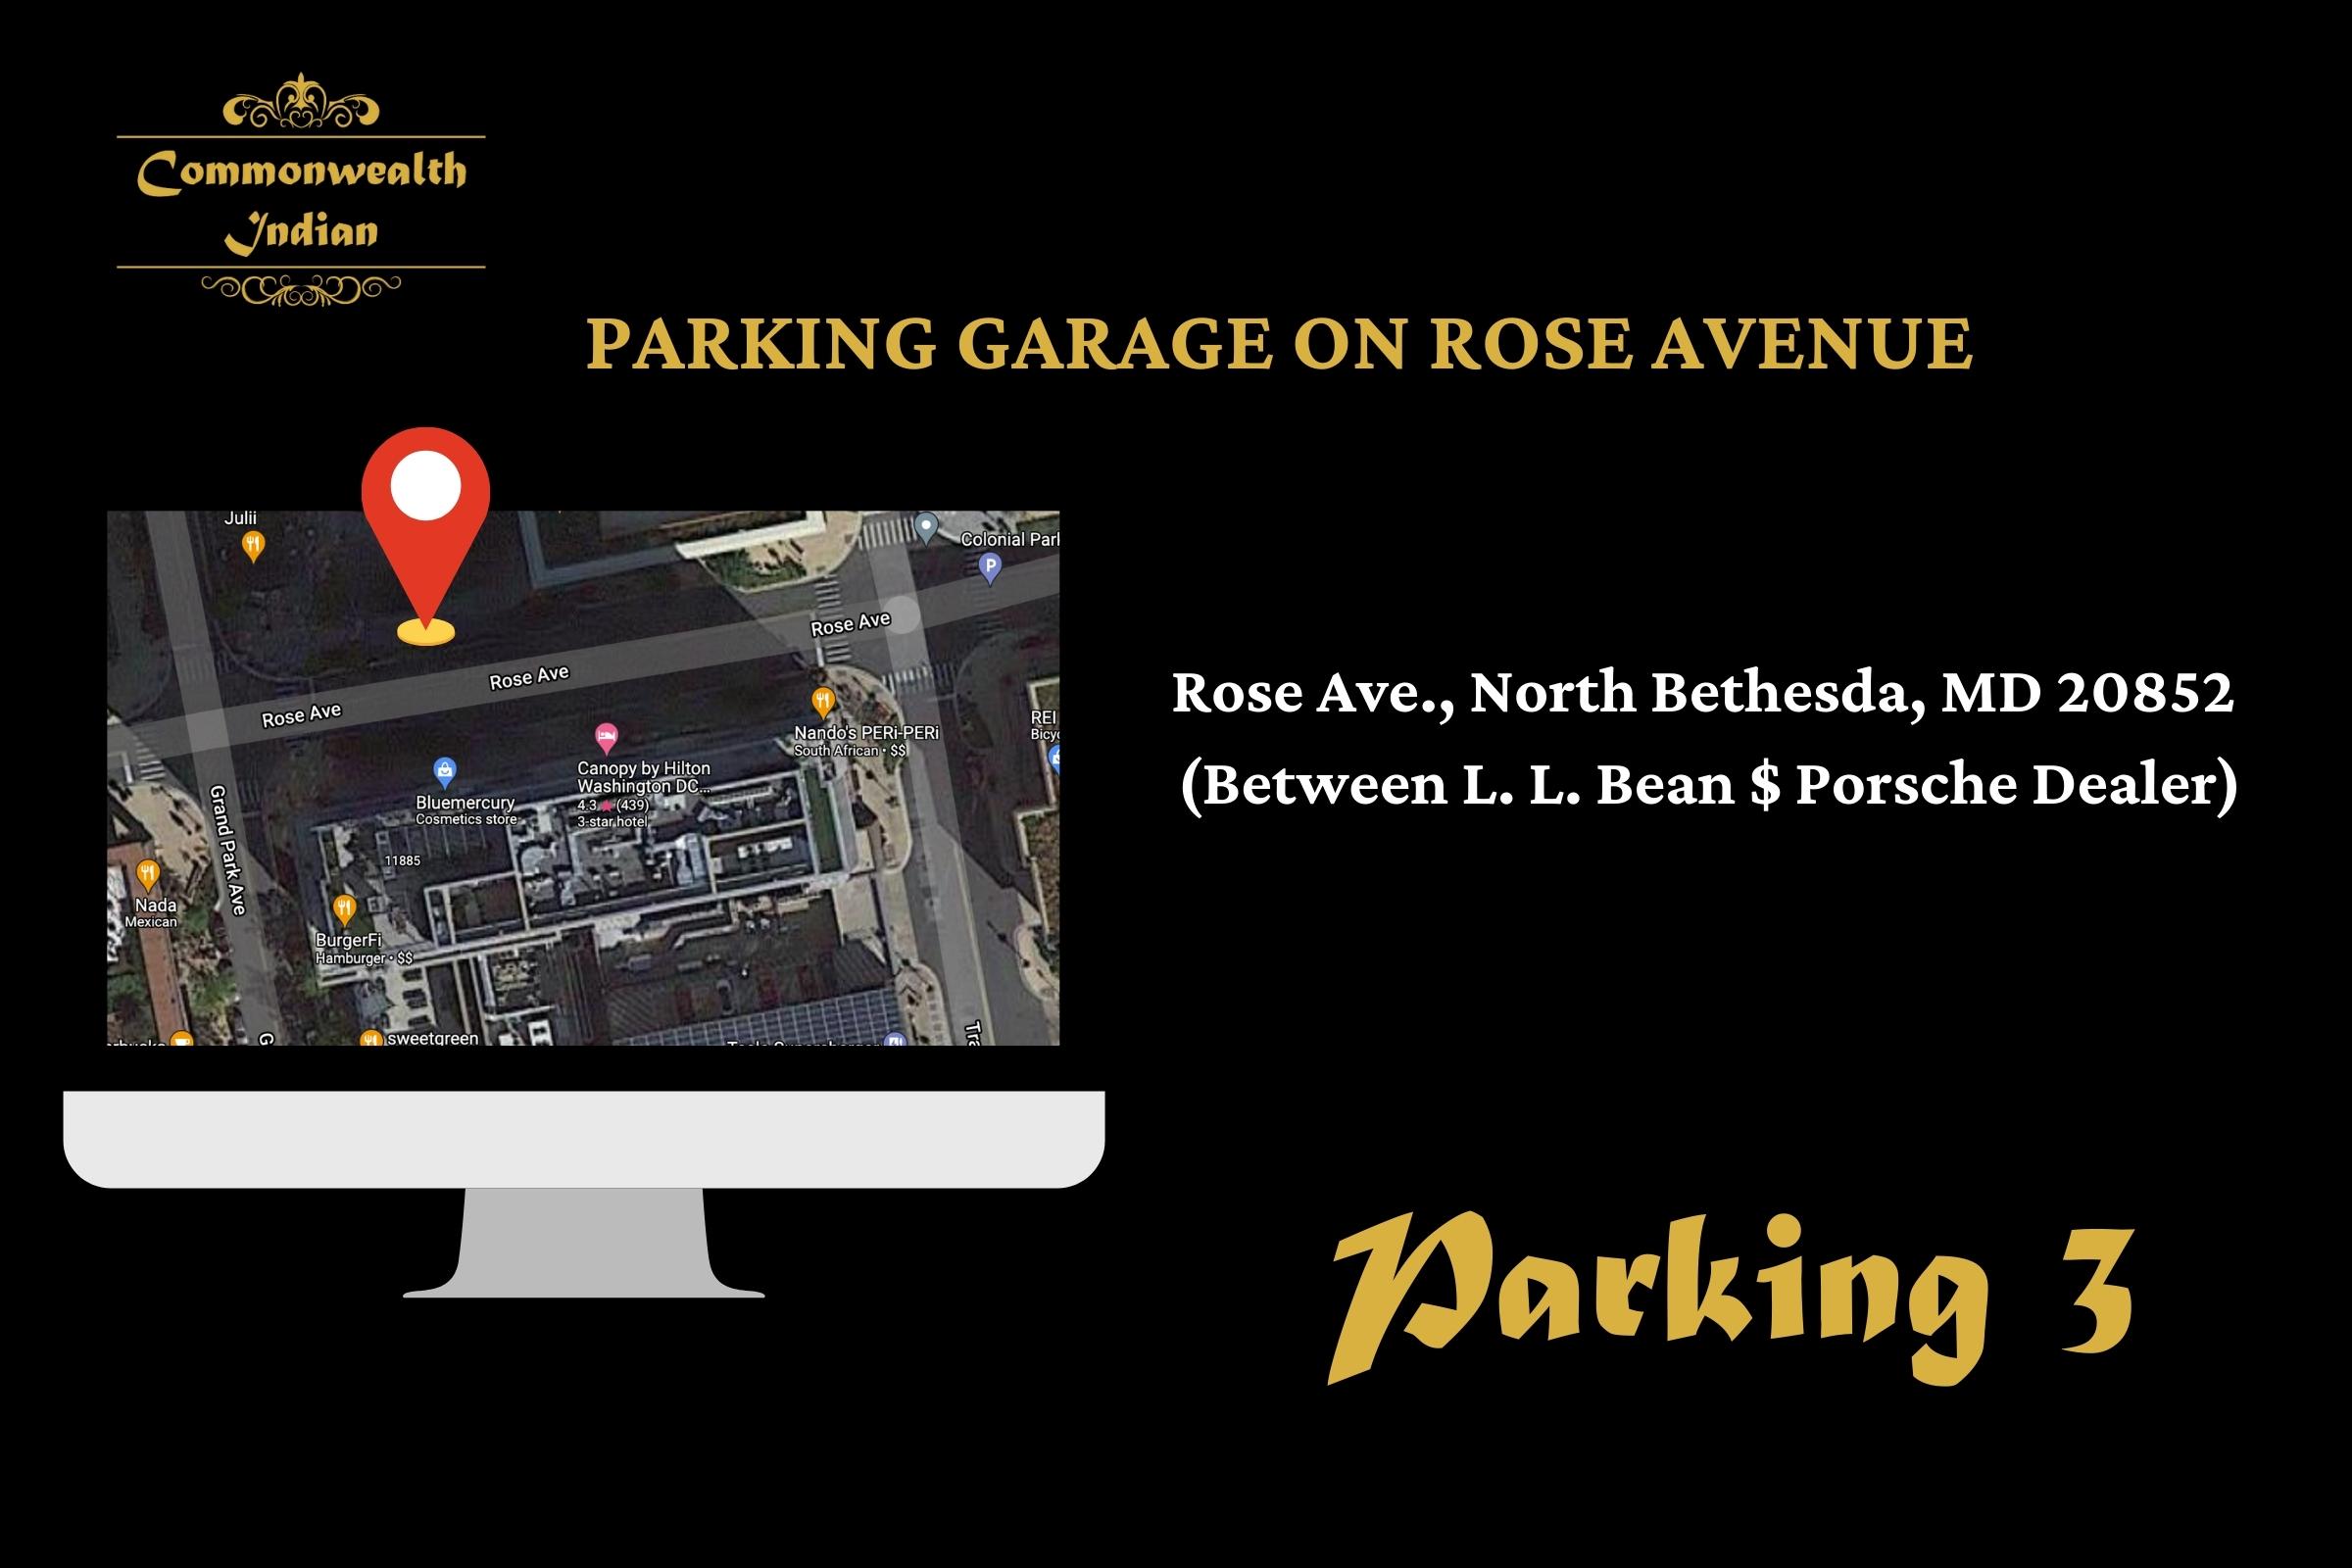 parking3 - Parking